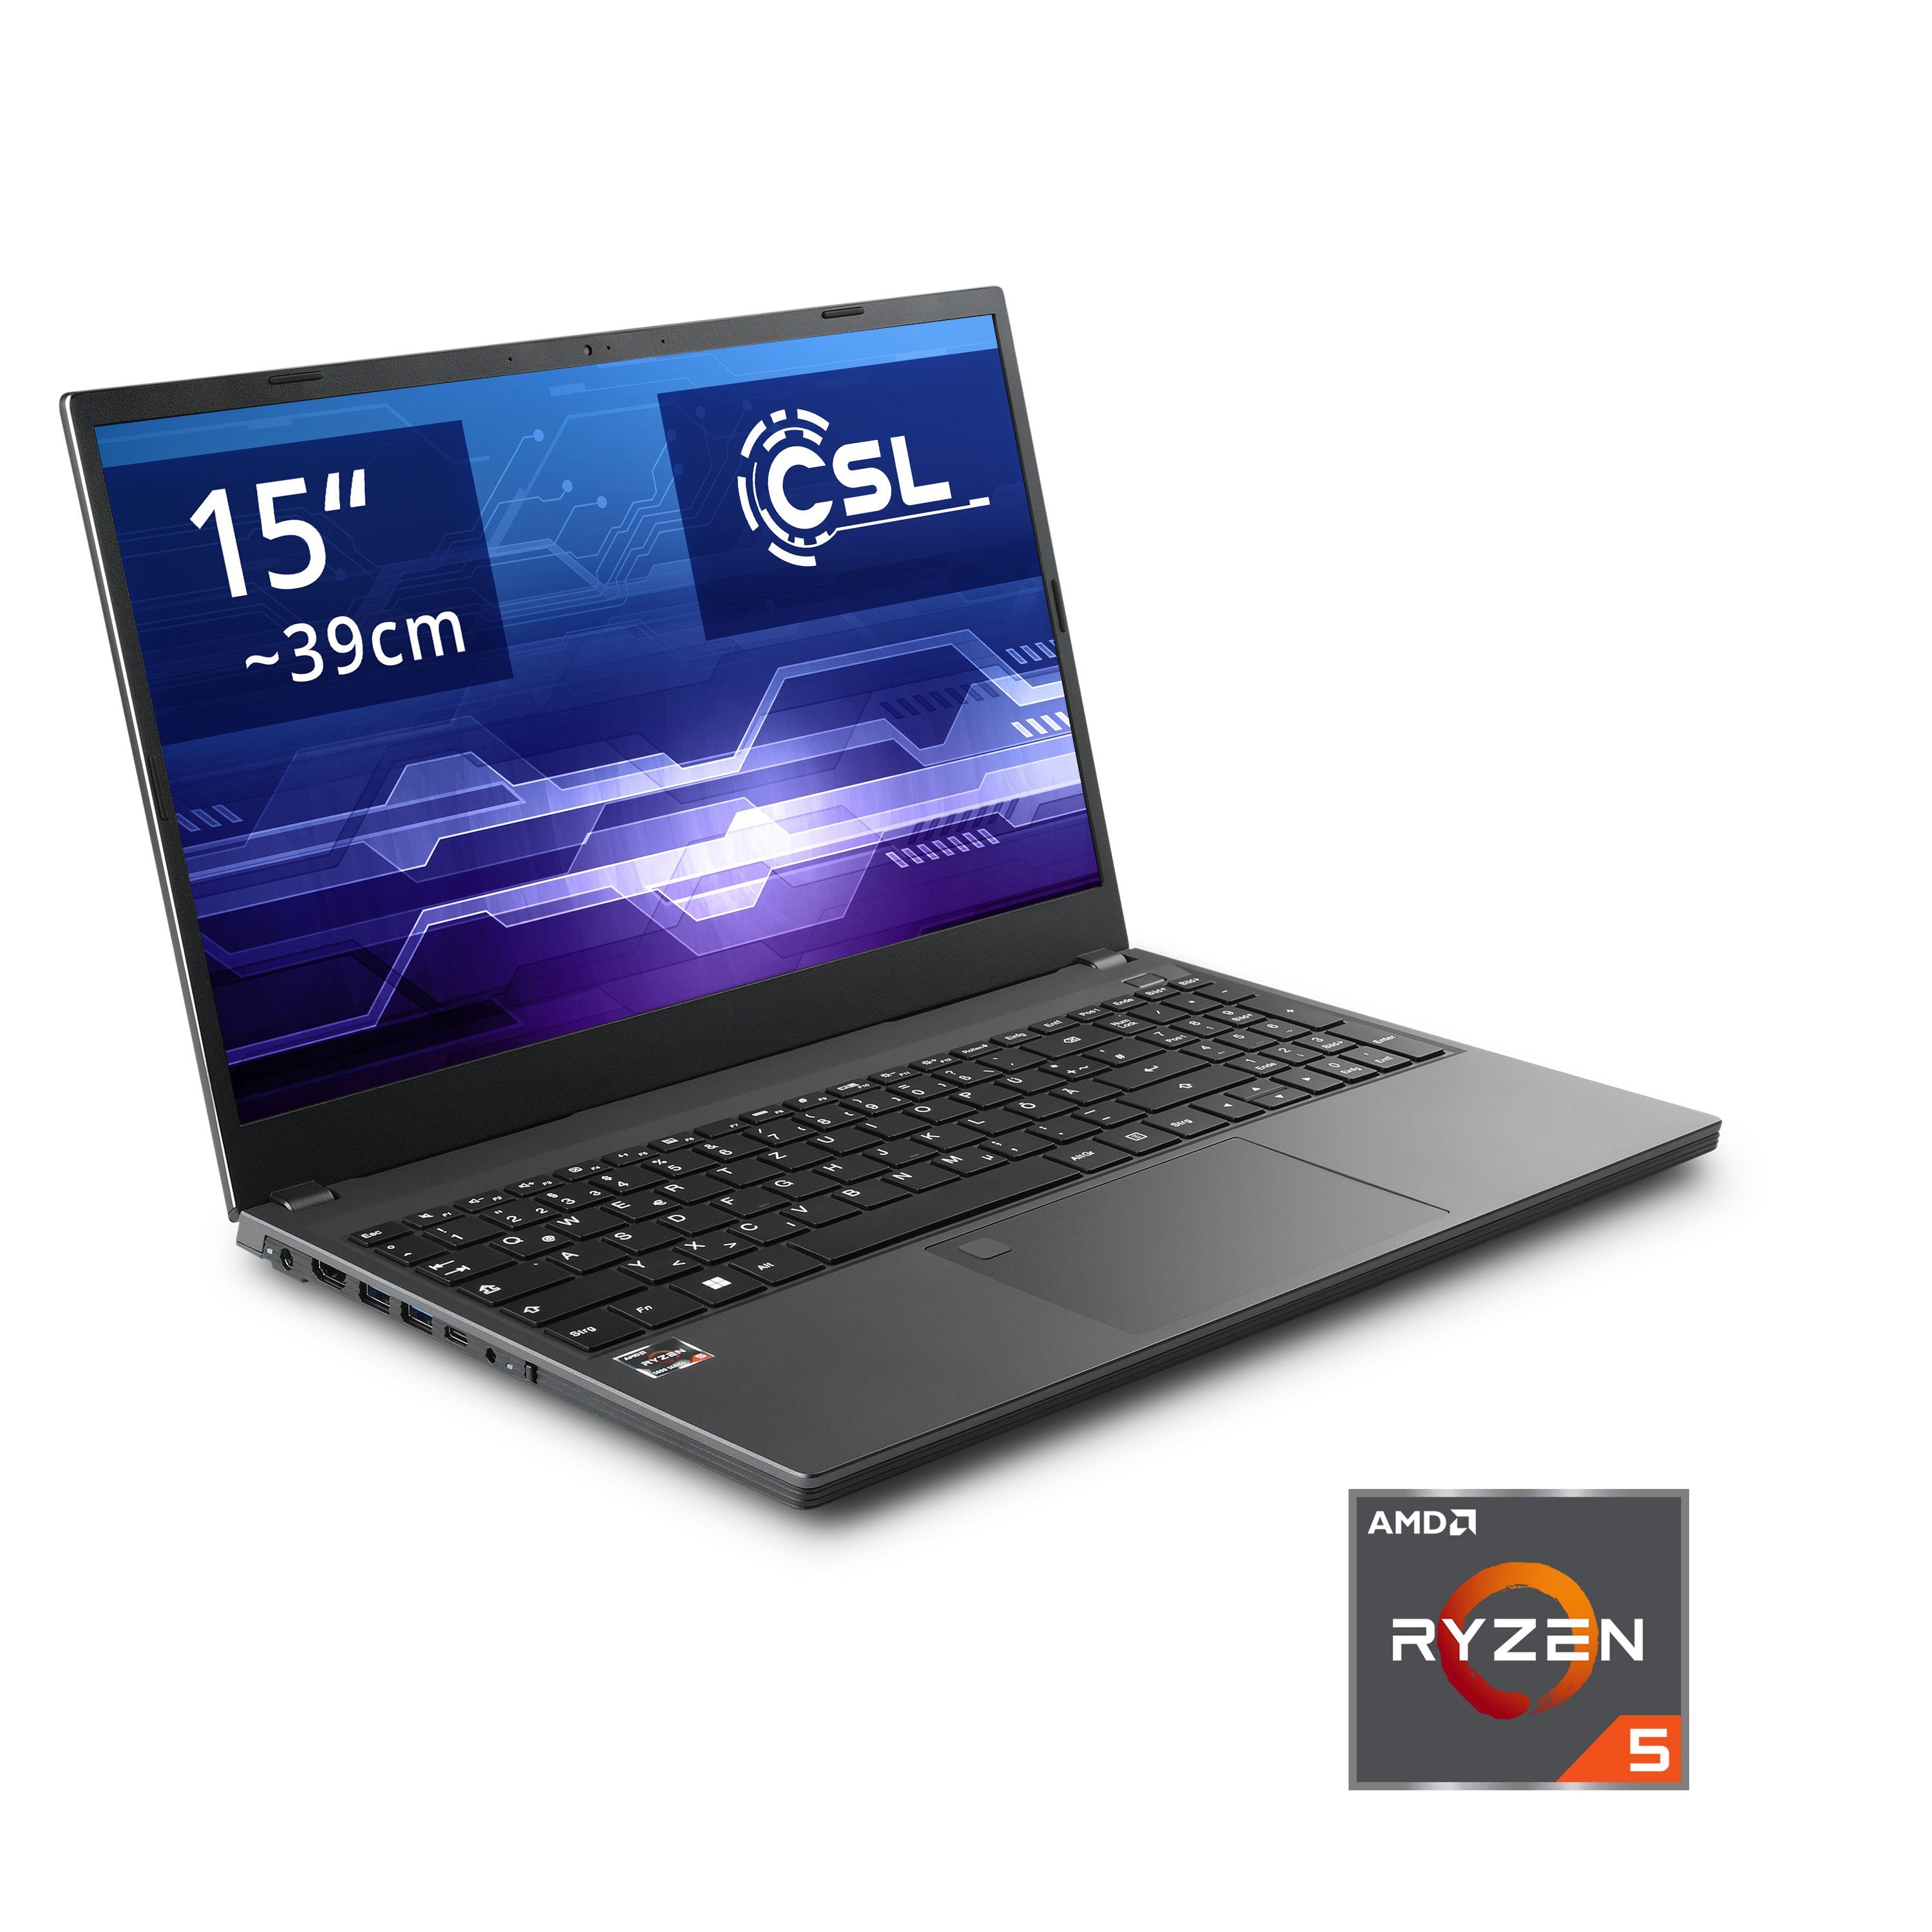 CSL R'Evolve C15 5500U/64GB/4000GB/Windows 11 Home Notebook (39,6 cm/15,6 Zoll, 4000 GB SSD)